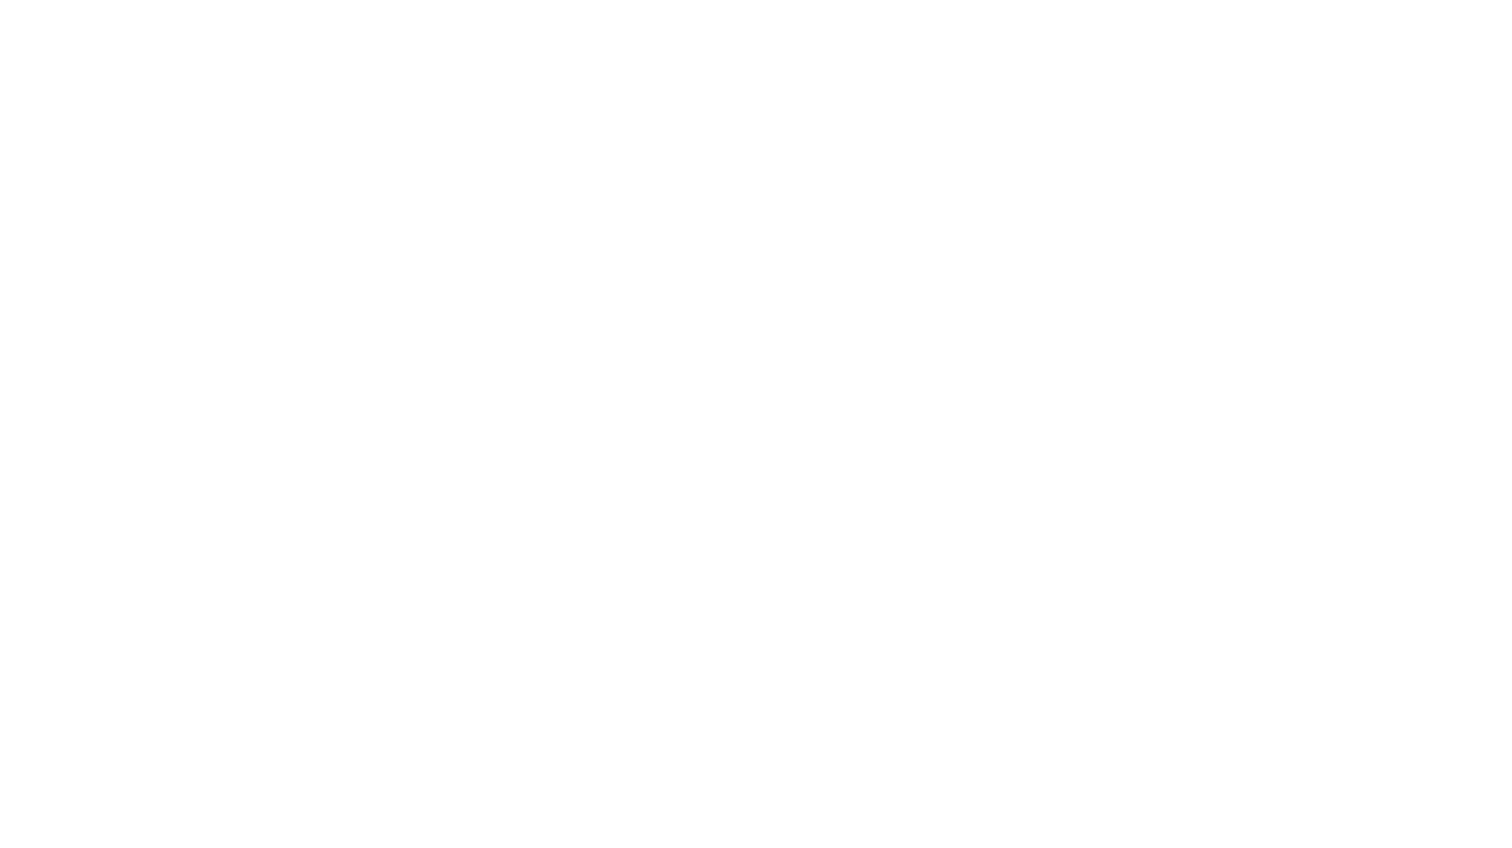 Infinite Innovation Background - Infinite Innovation | Infinite Innovation